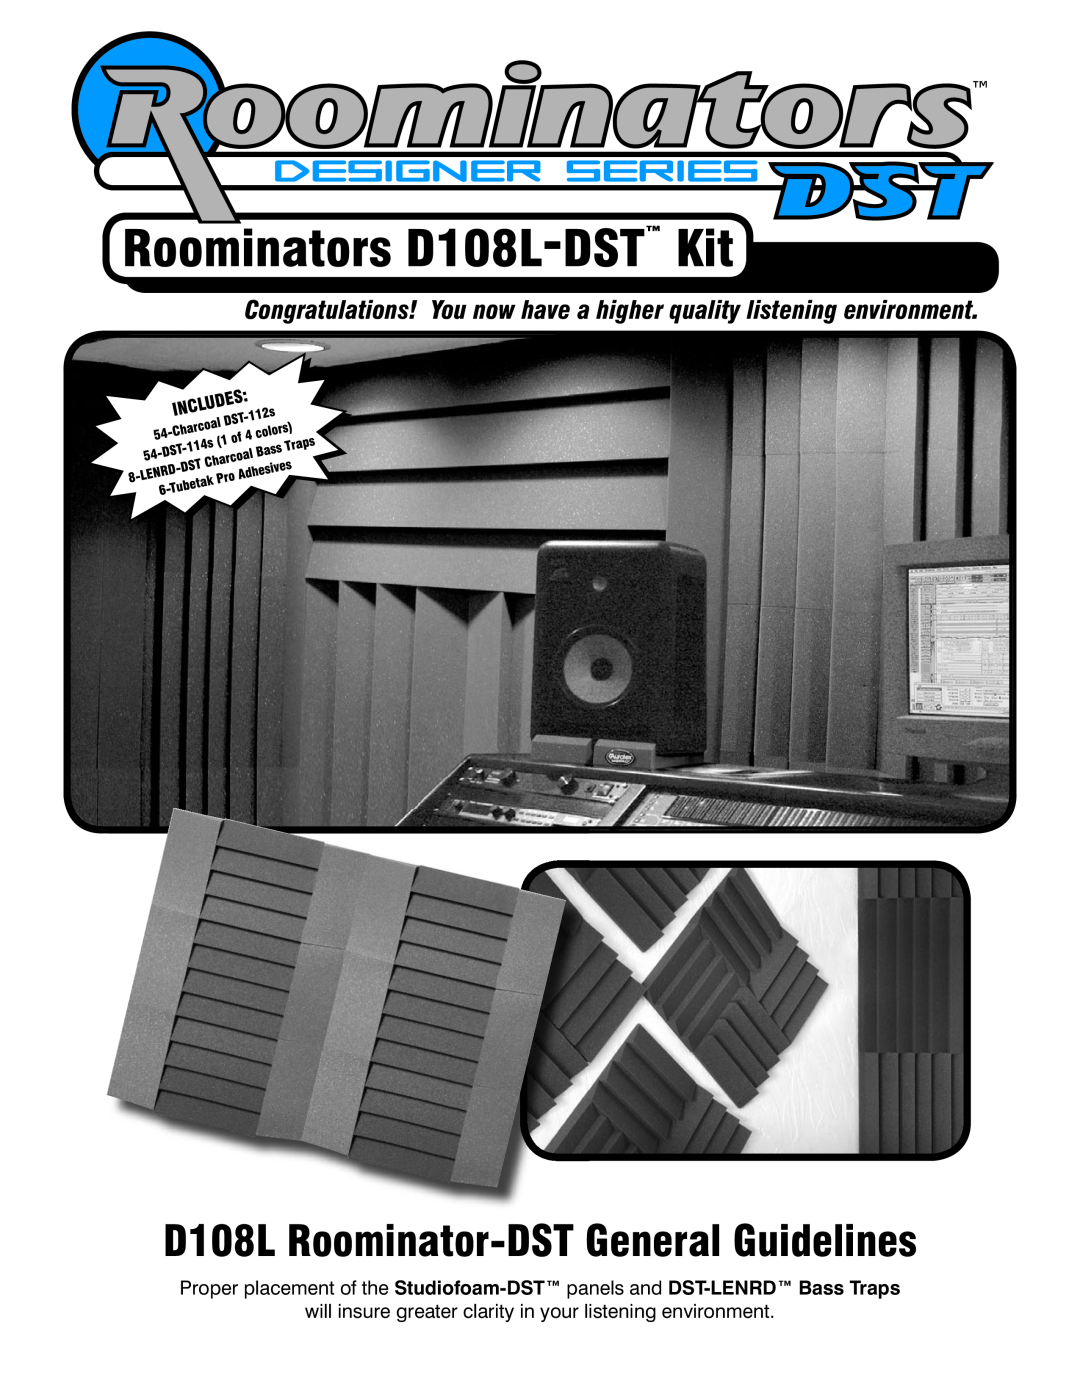 Auralex Acoustics manual D108L Roominator-DSTGeneral Guidelines 